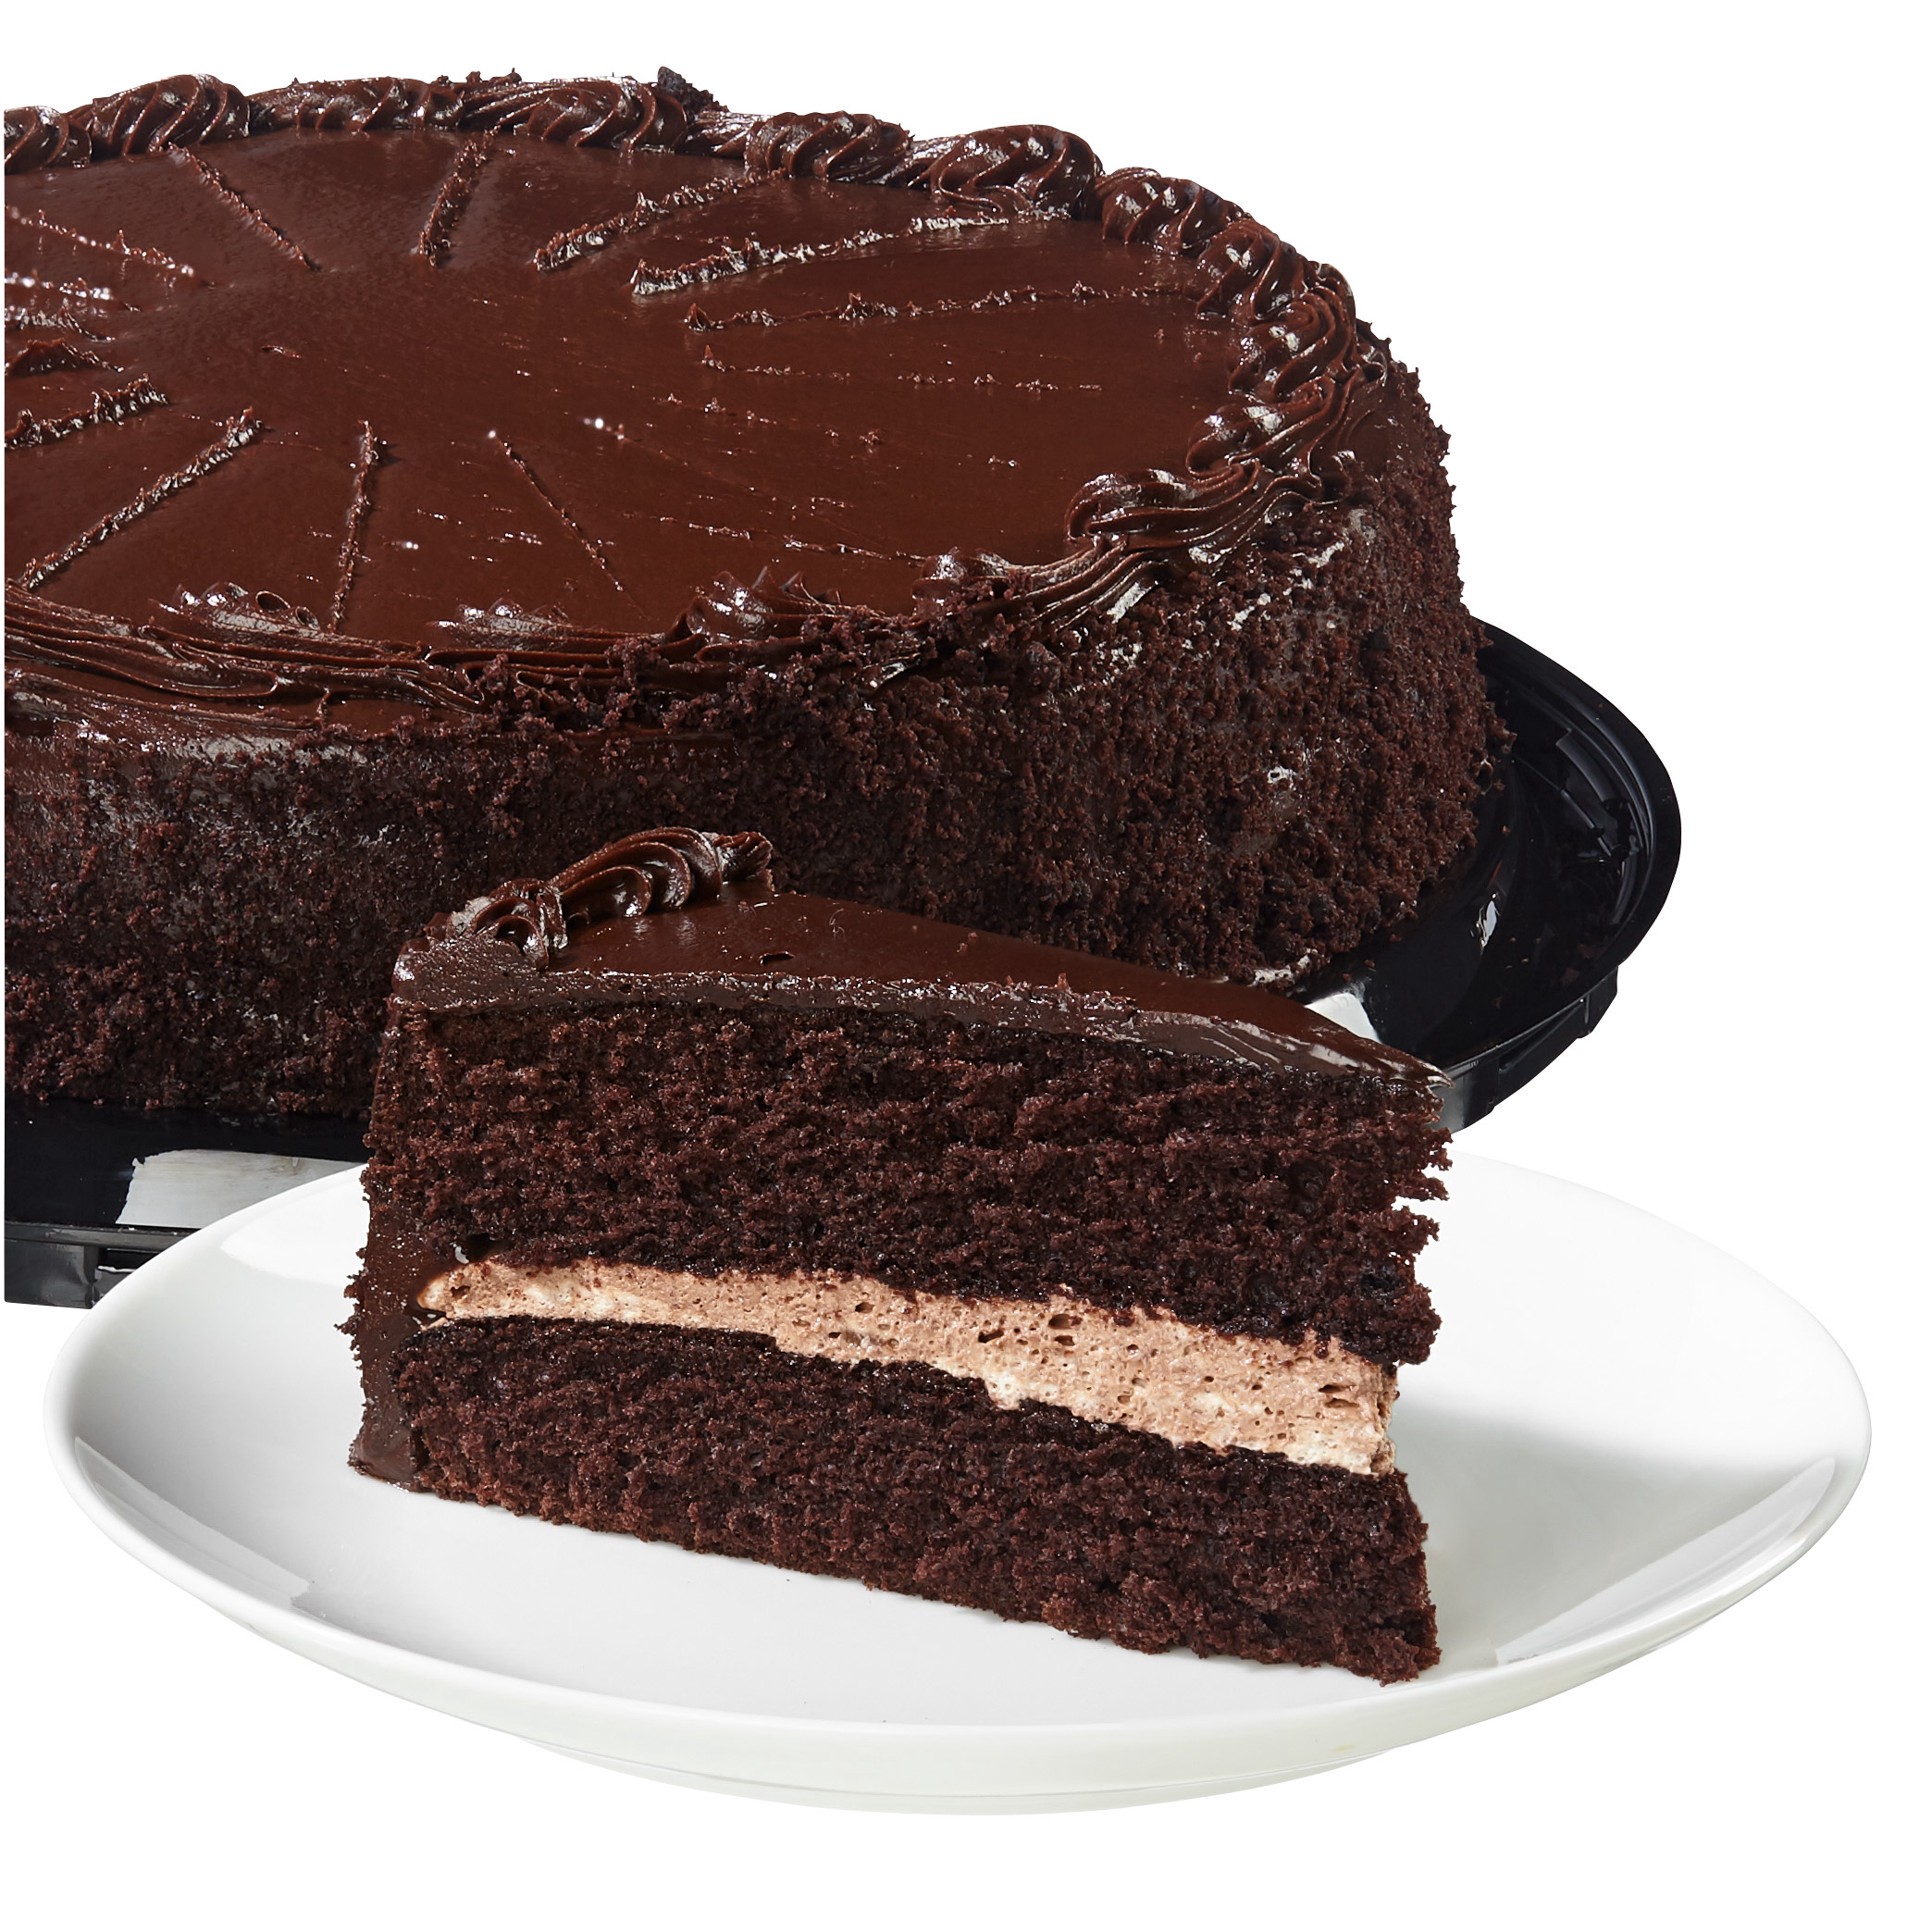 Costco Does It Again - Tuxedo Chocolate Mousse Cake #costco  #costcodoesitagain | Facebook